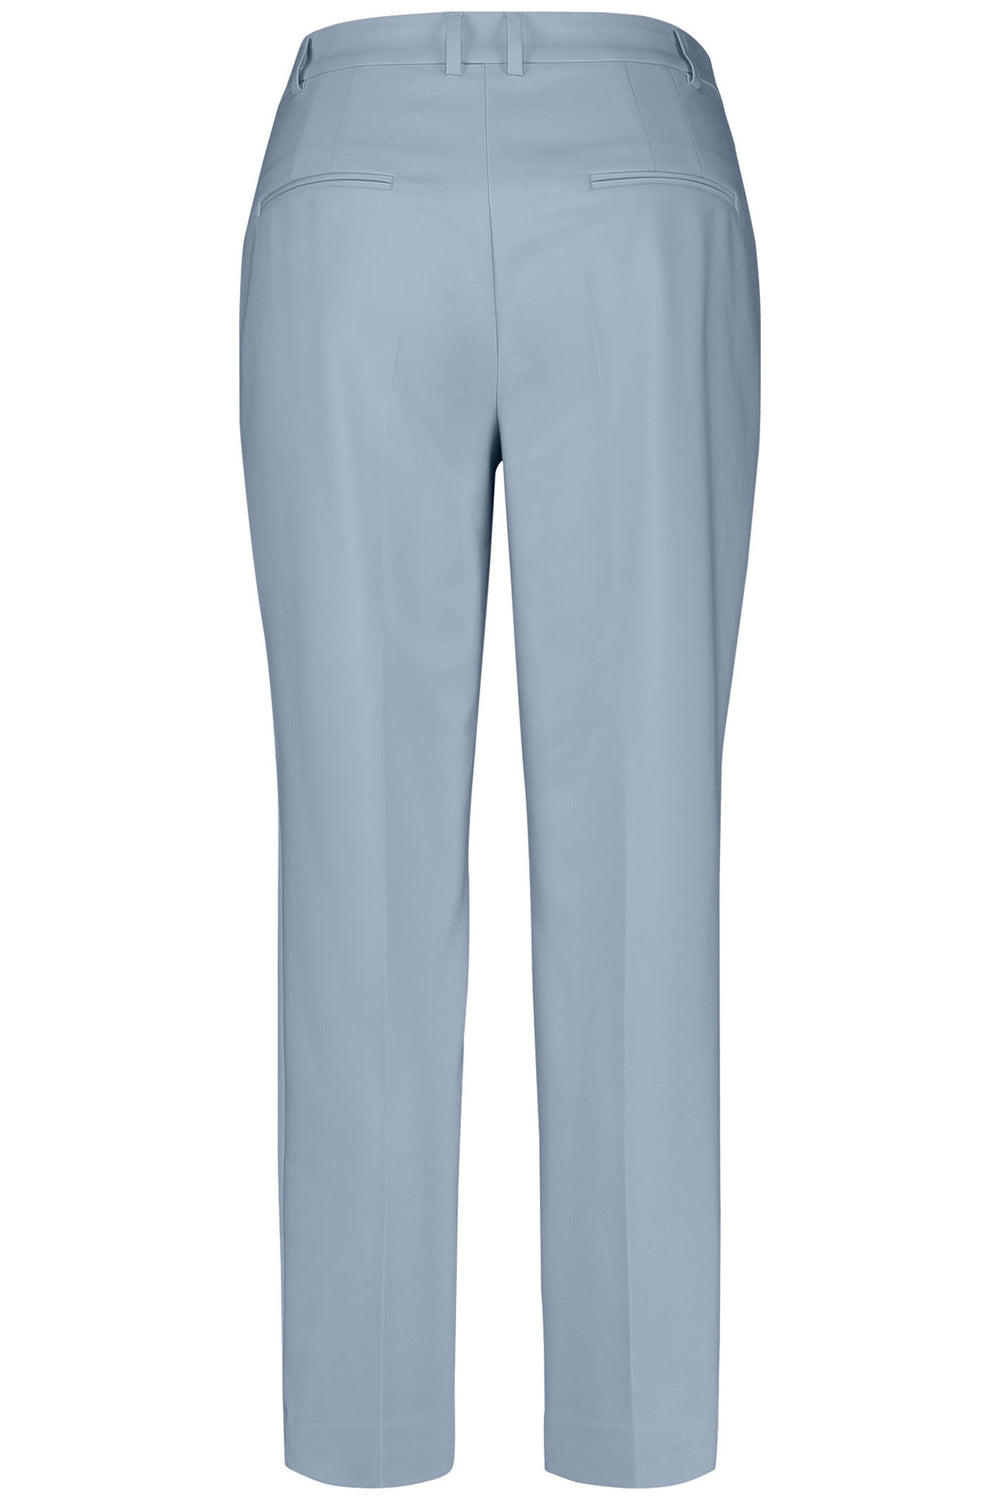 Gerry Weber 320052-3133 Cloud Blue Trousers - Dotique Chesterfield